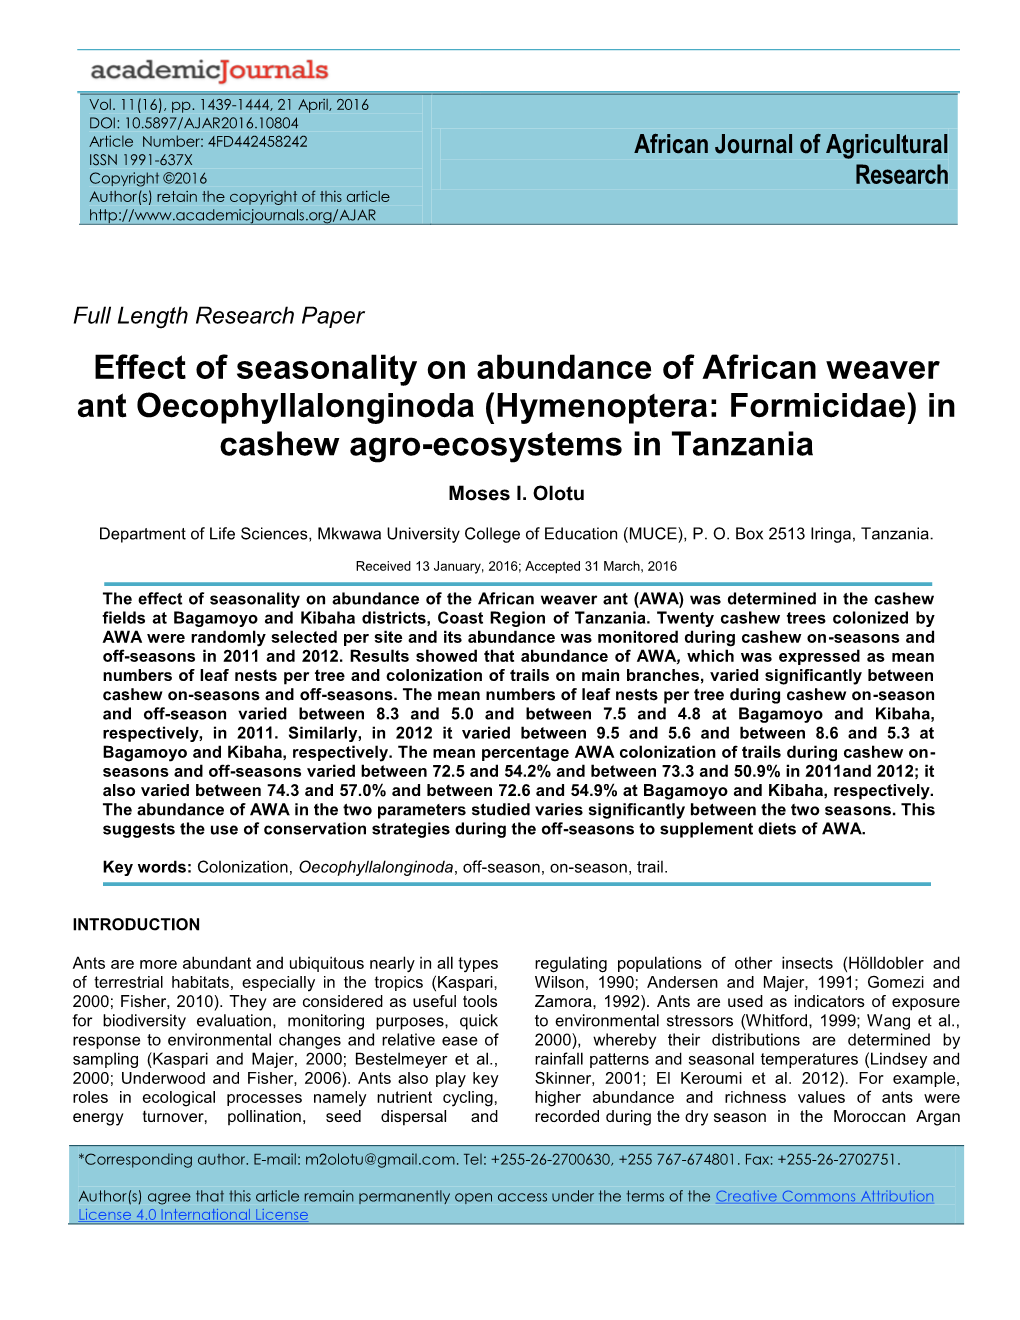 Effect of Seasonality on Abundance of African Weaver Ant Oecophyllalonginoda (Hymenoptera: Formicidae) in Cashew Agro-Ecosystems in Tanzania